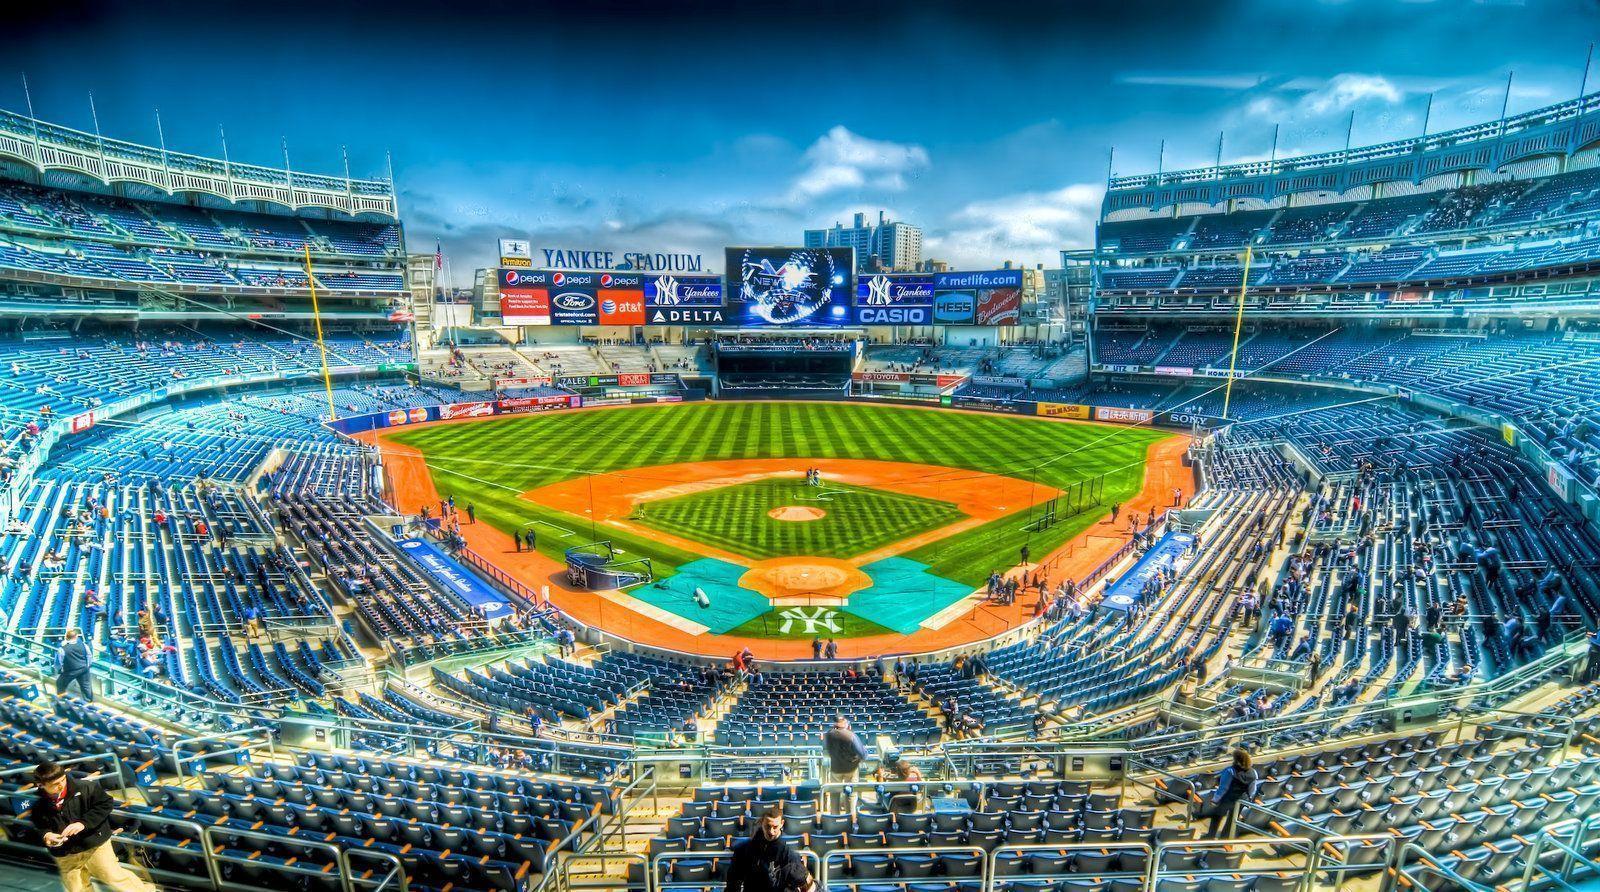 Yankee Stadium 4k Ultra Hd Wallpapers Top Free Yankee Stadium 4k Ultra Hd Backgrounds Wallpaperaccess